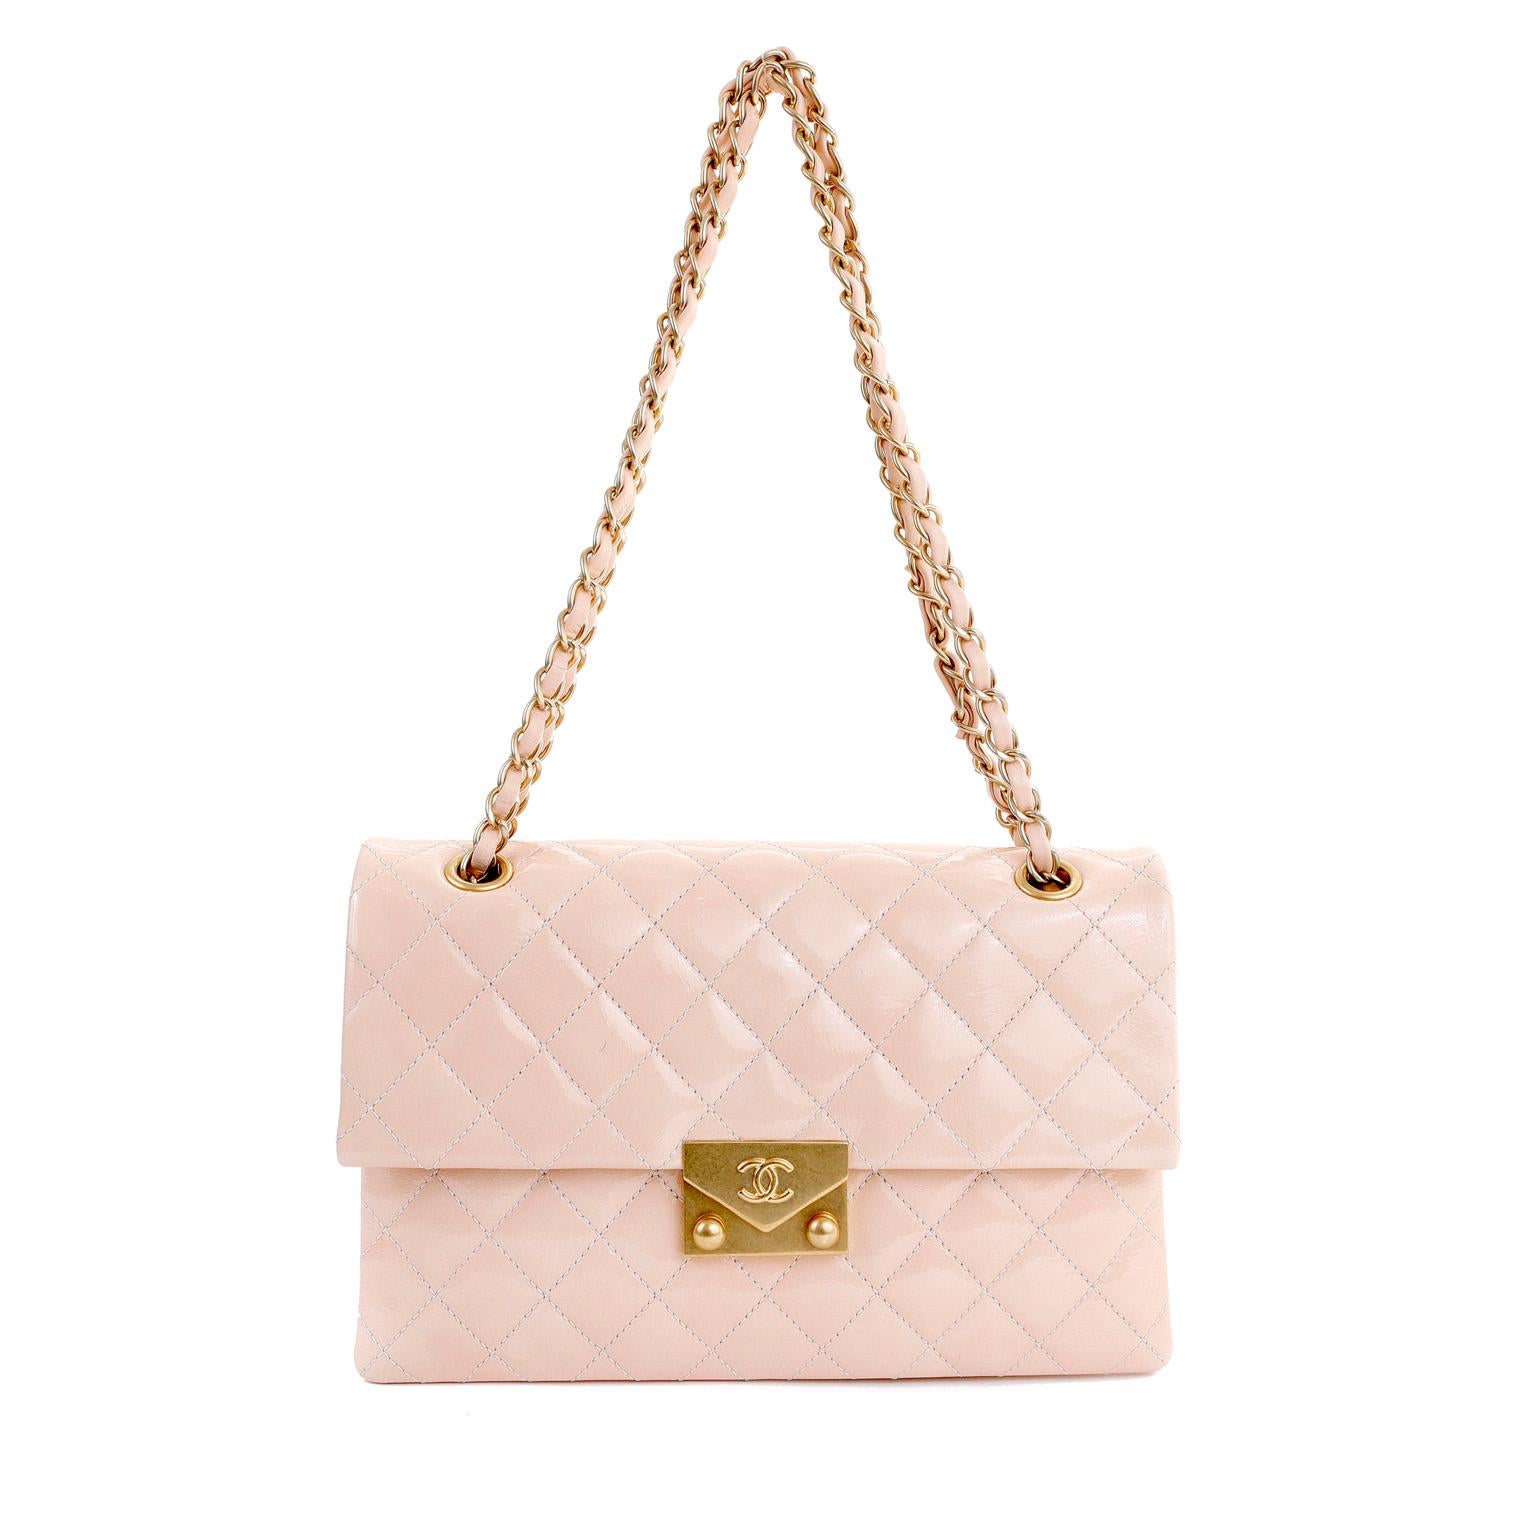 Women's Chanel Beige Patent Leather Envelope Flap Bag 